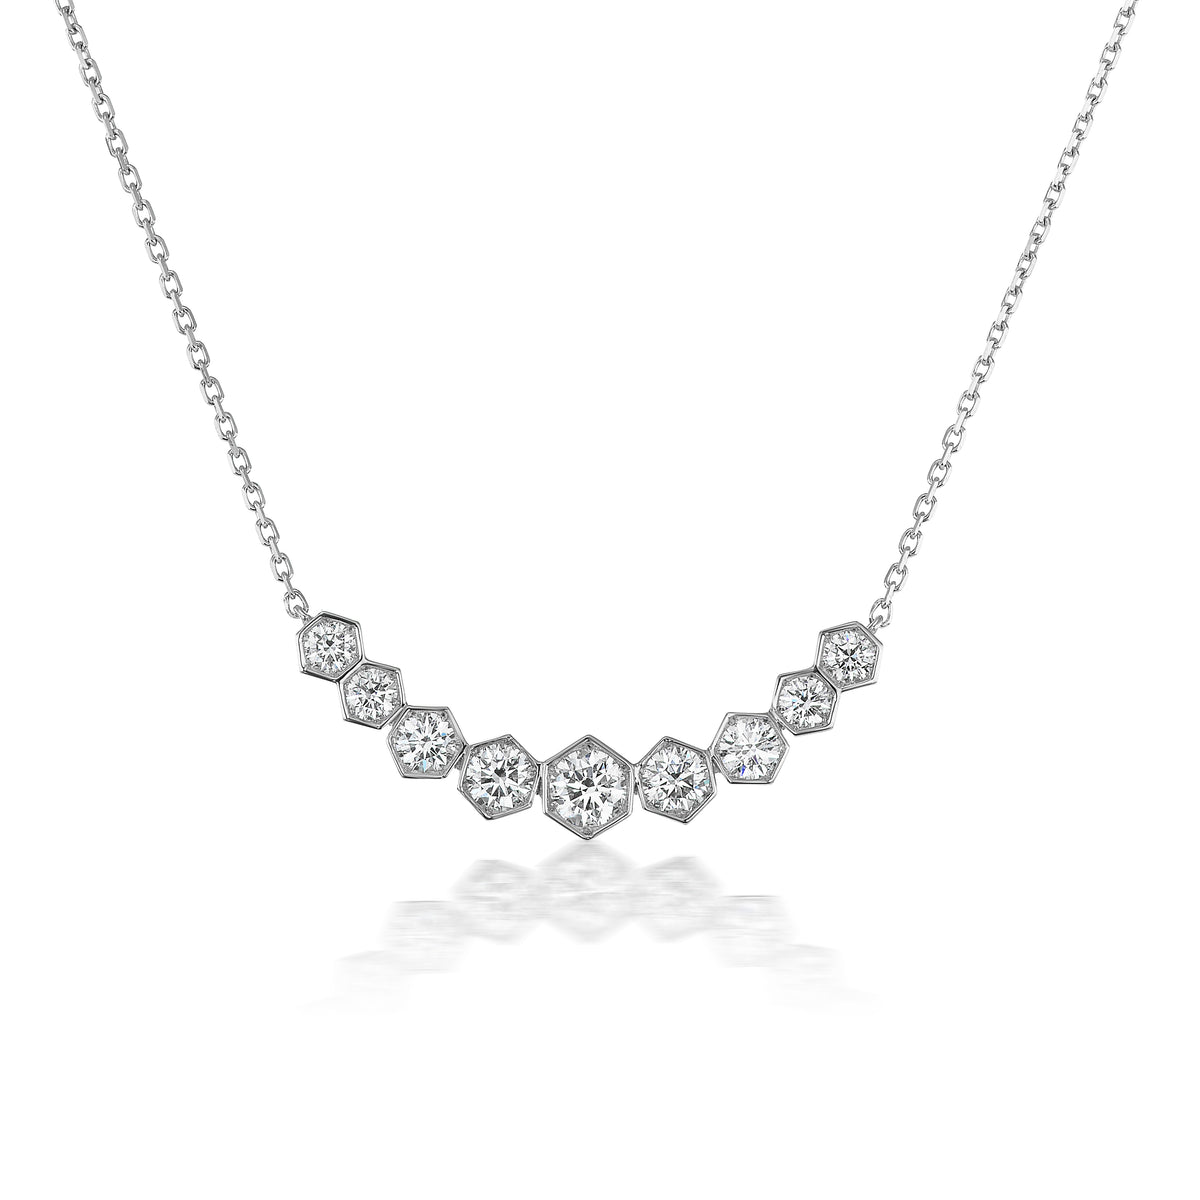 Graduated Hexagon Necklace with Round Brilliant Diamonds